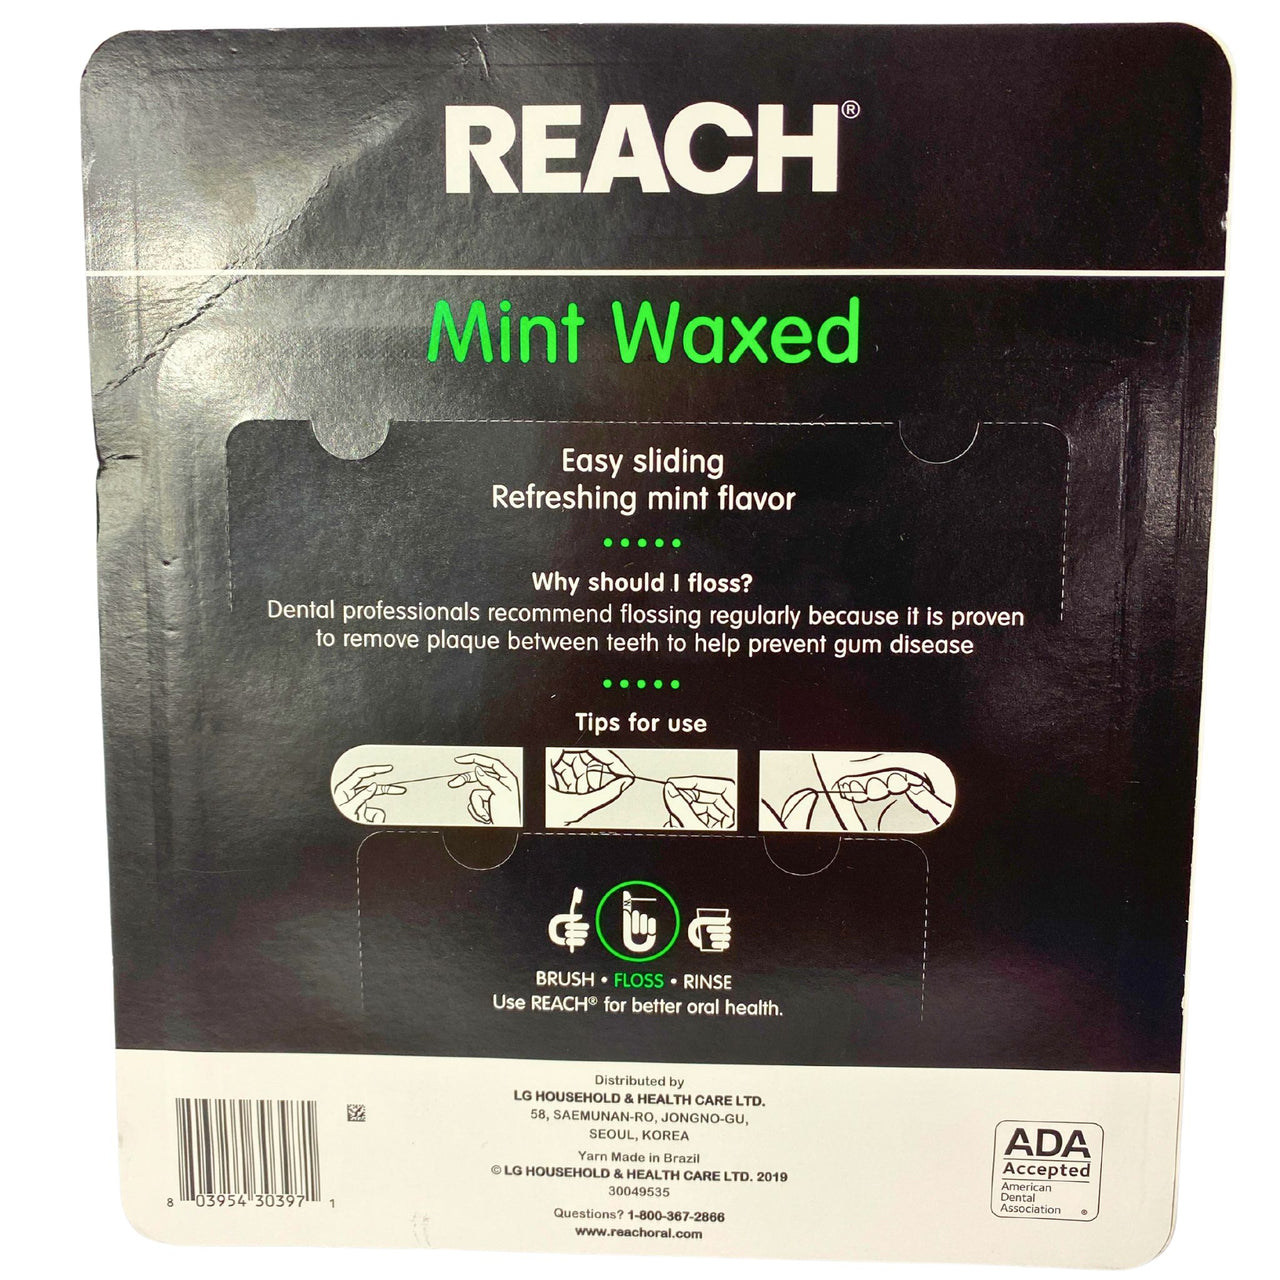 Reach Mint Waxed Easy Sliding Refreshing Mint Flavor